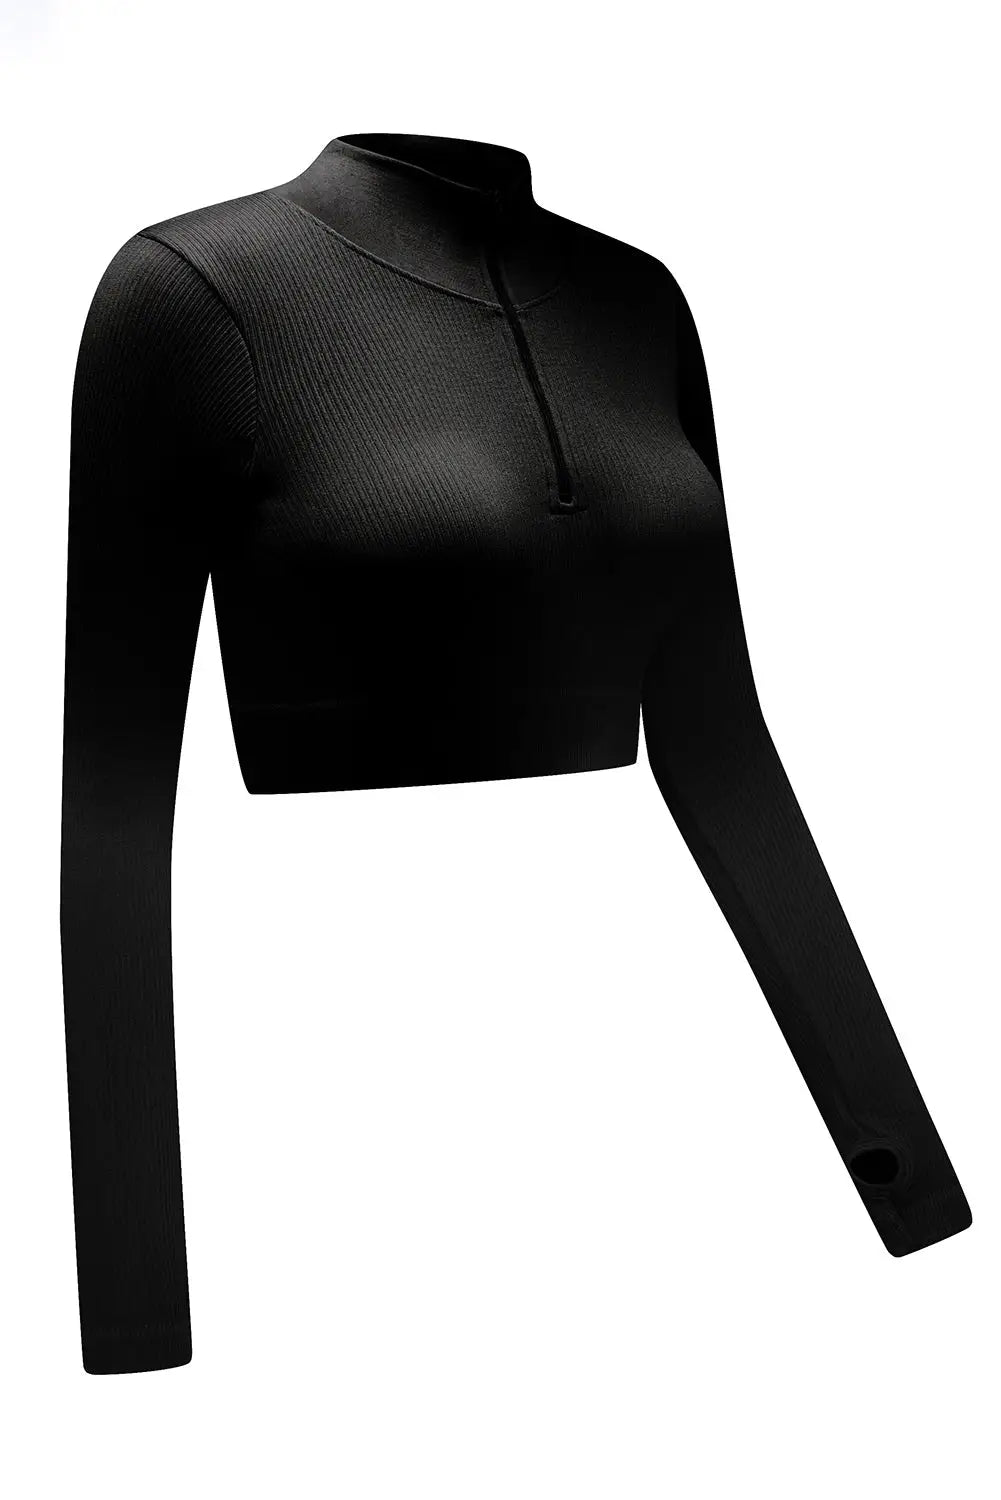 Black Half Zipper Long Sleeve Cropped Yoga Top - Activewear